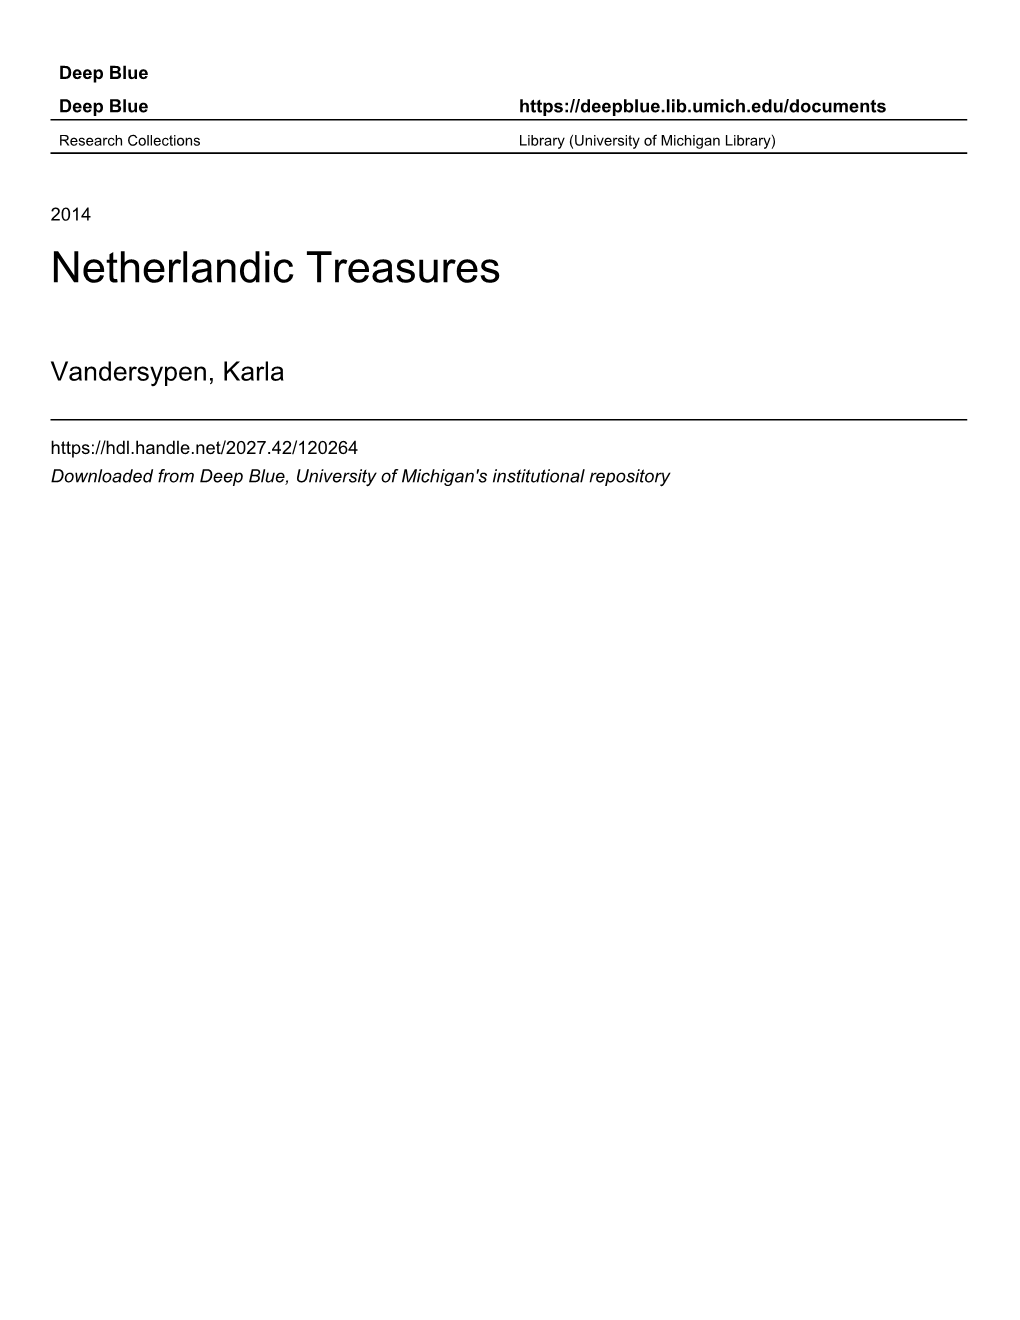 Netherlandic Treasures